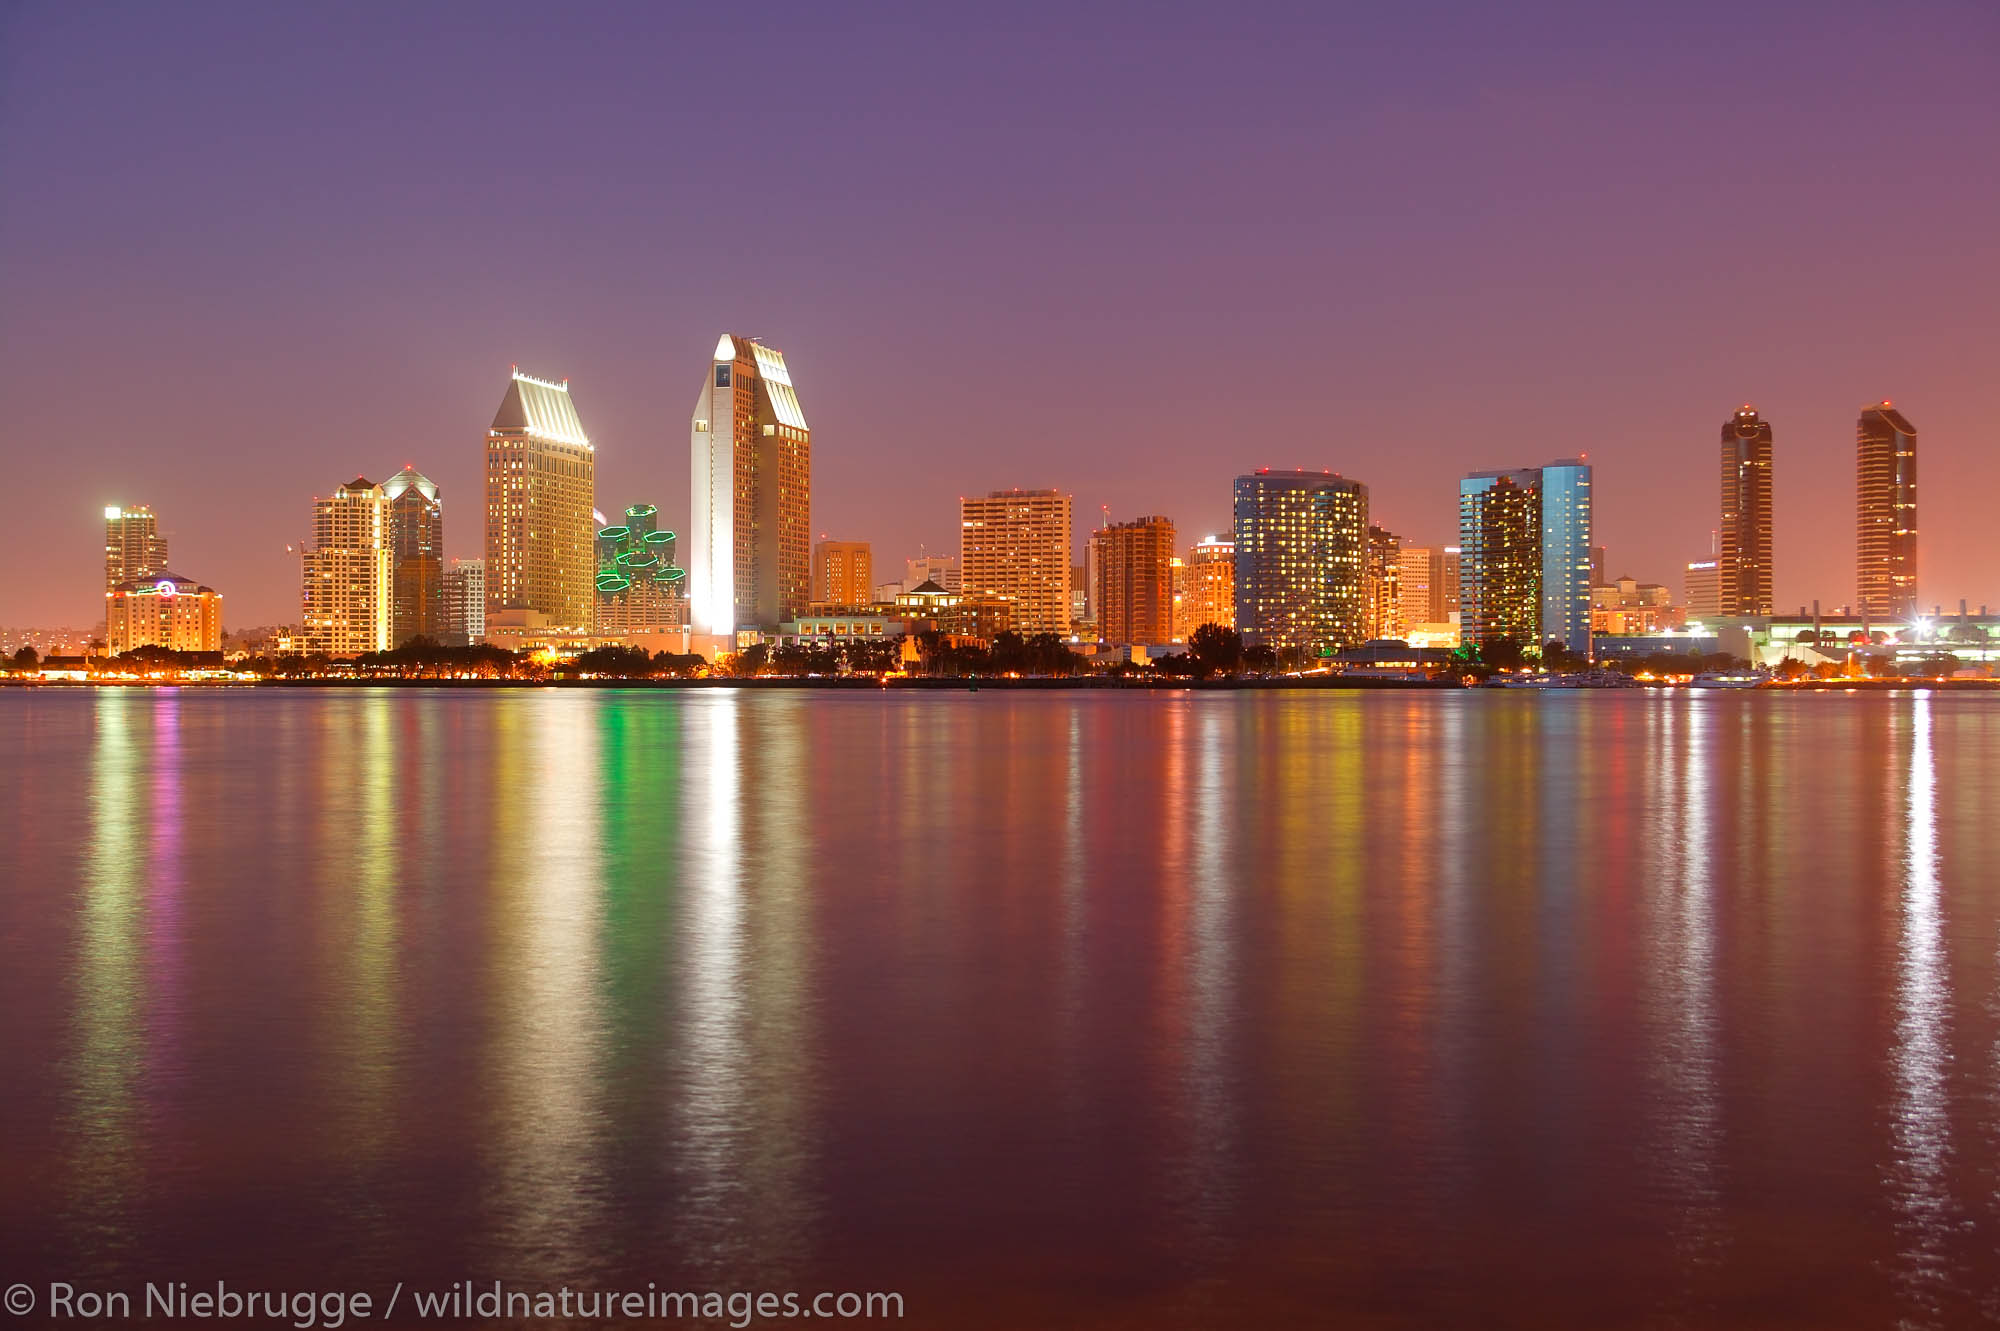 The downtown San Diego skyline at night as viewed from Coronado, San Diego, California.